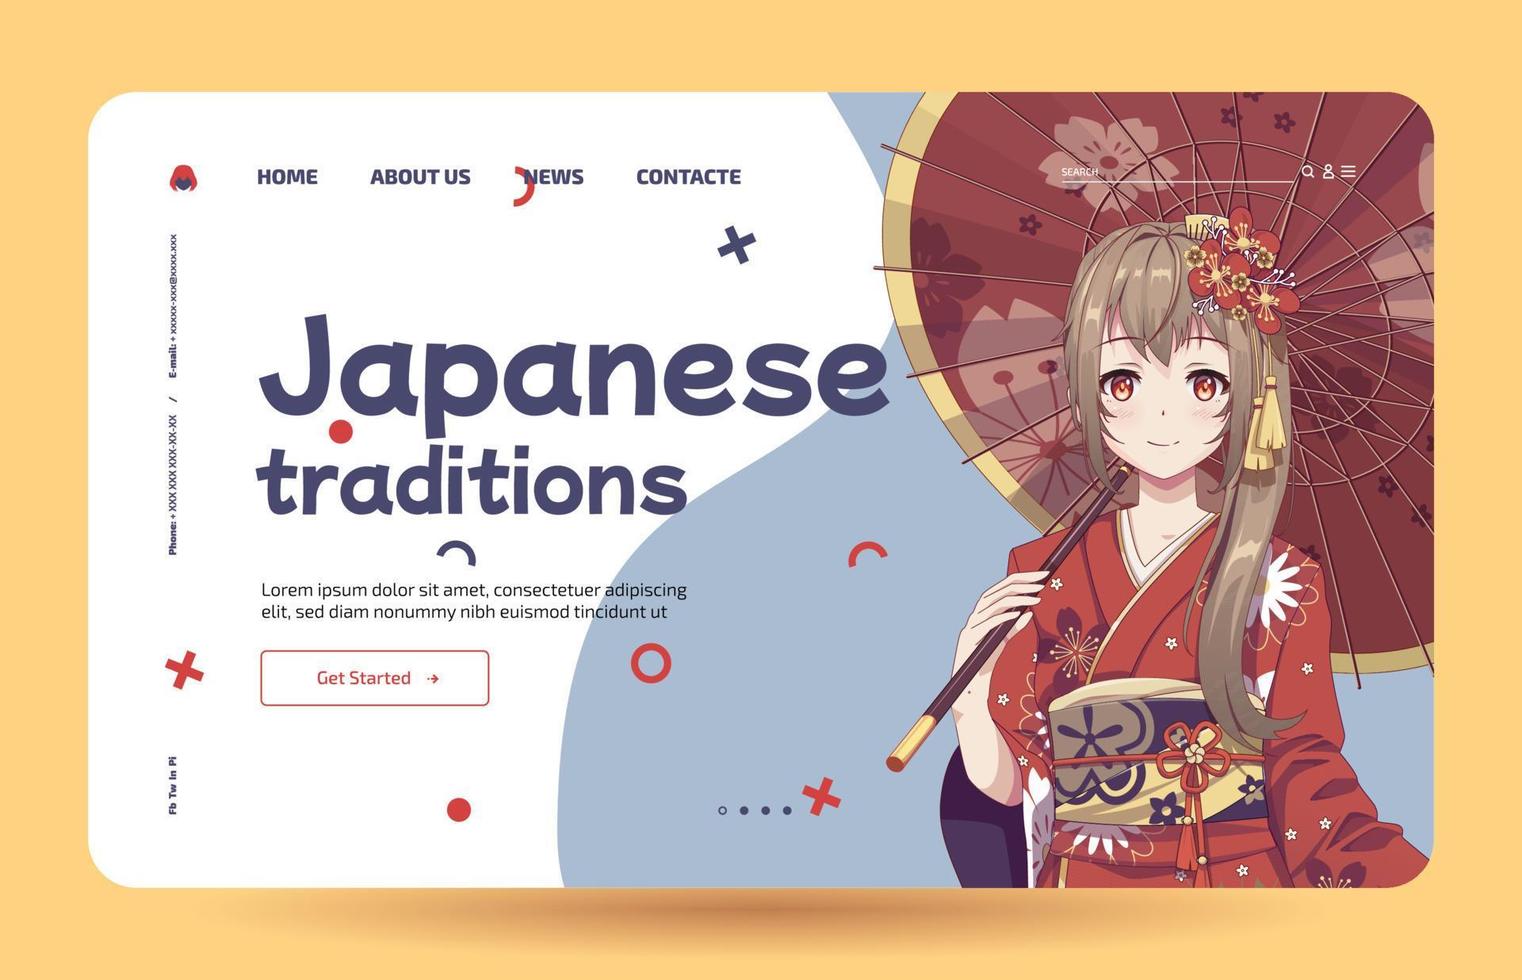 Anime manga girls in traditional Japanese kimono costume holding umbrella. Learn Japanese - Landing page template vector